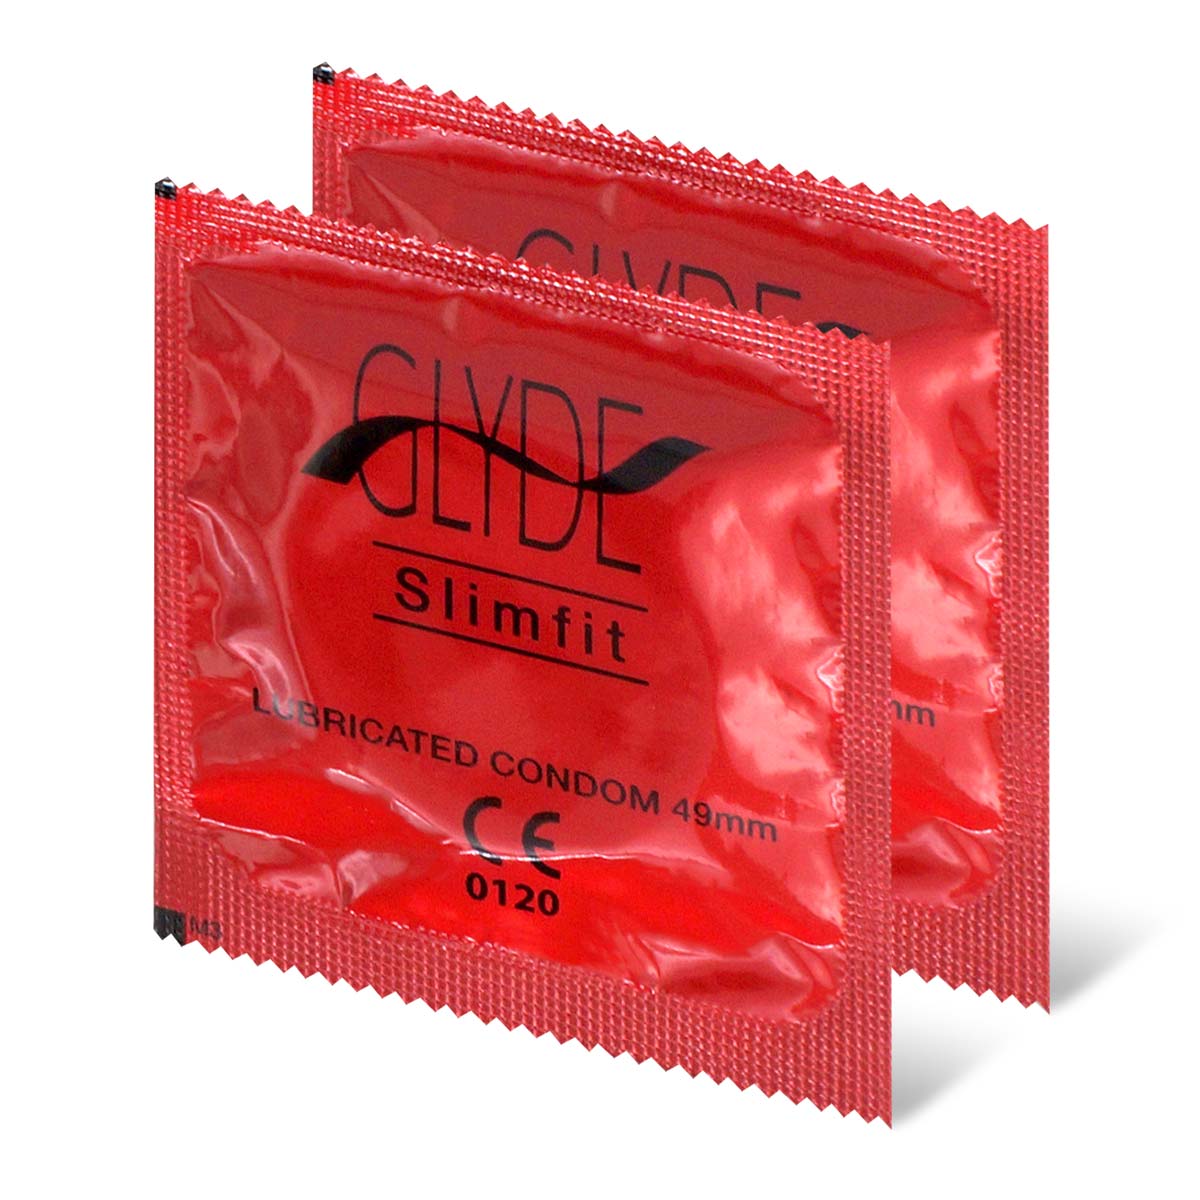 Glyde Vegan Condom Slimfit 49mm 2's Pack Latex Condom-p_1